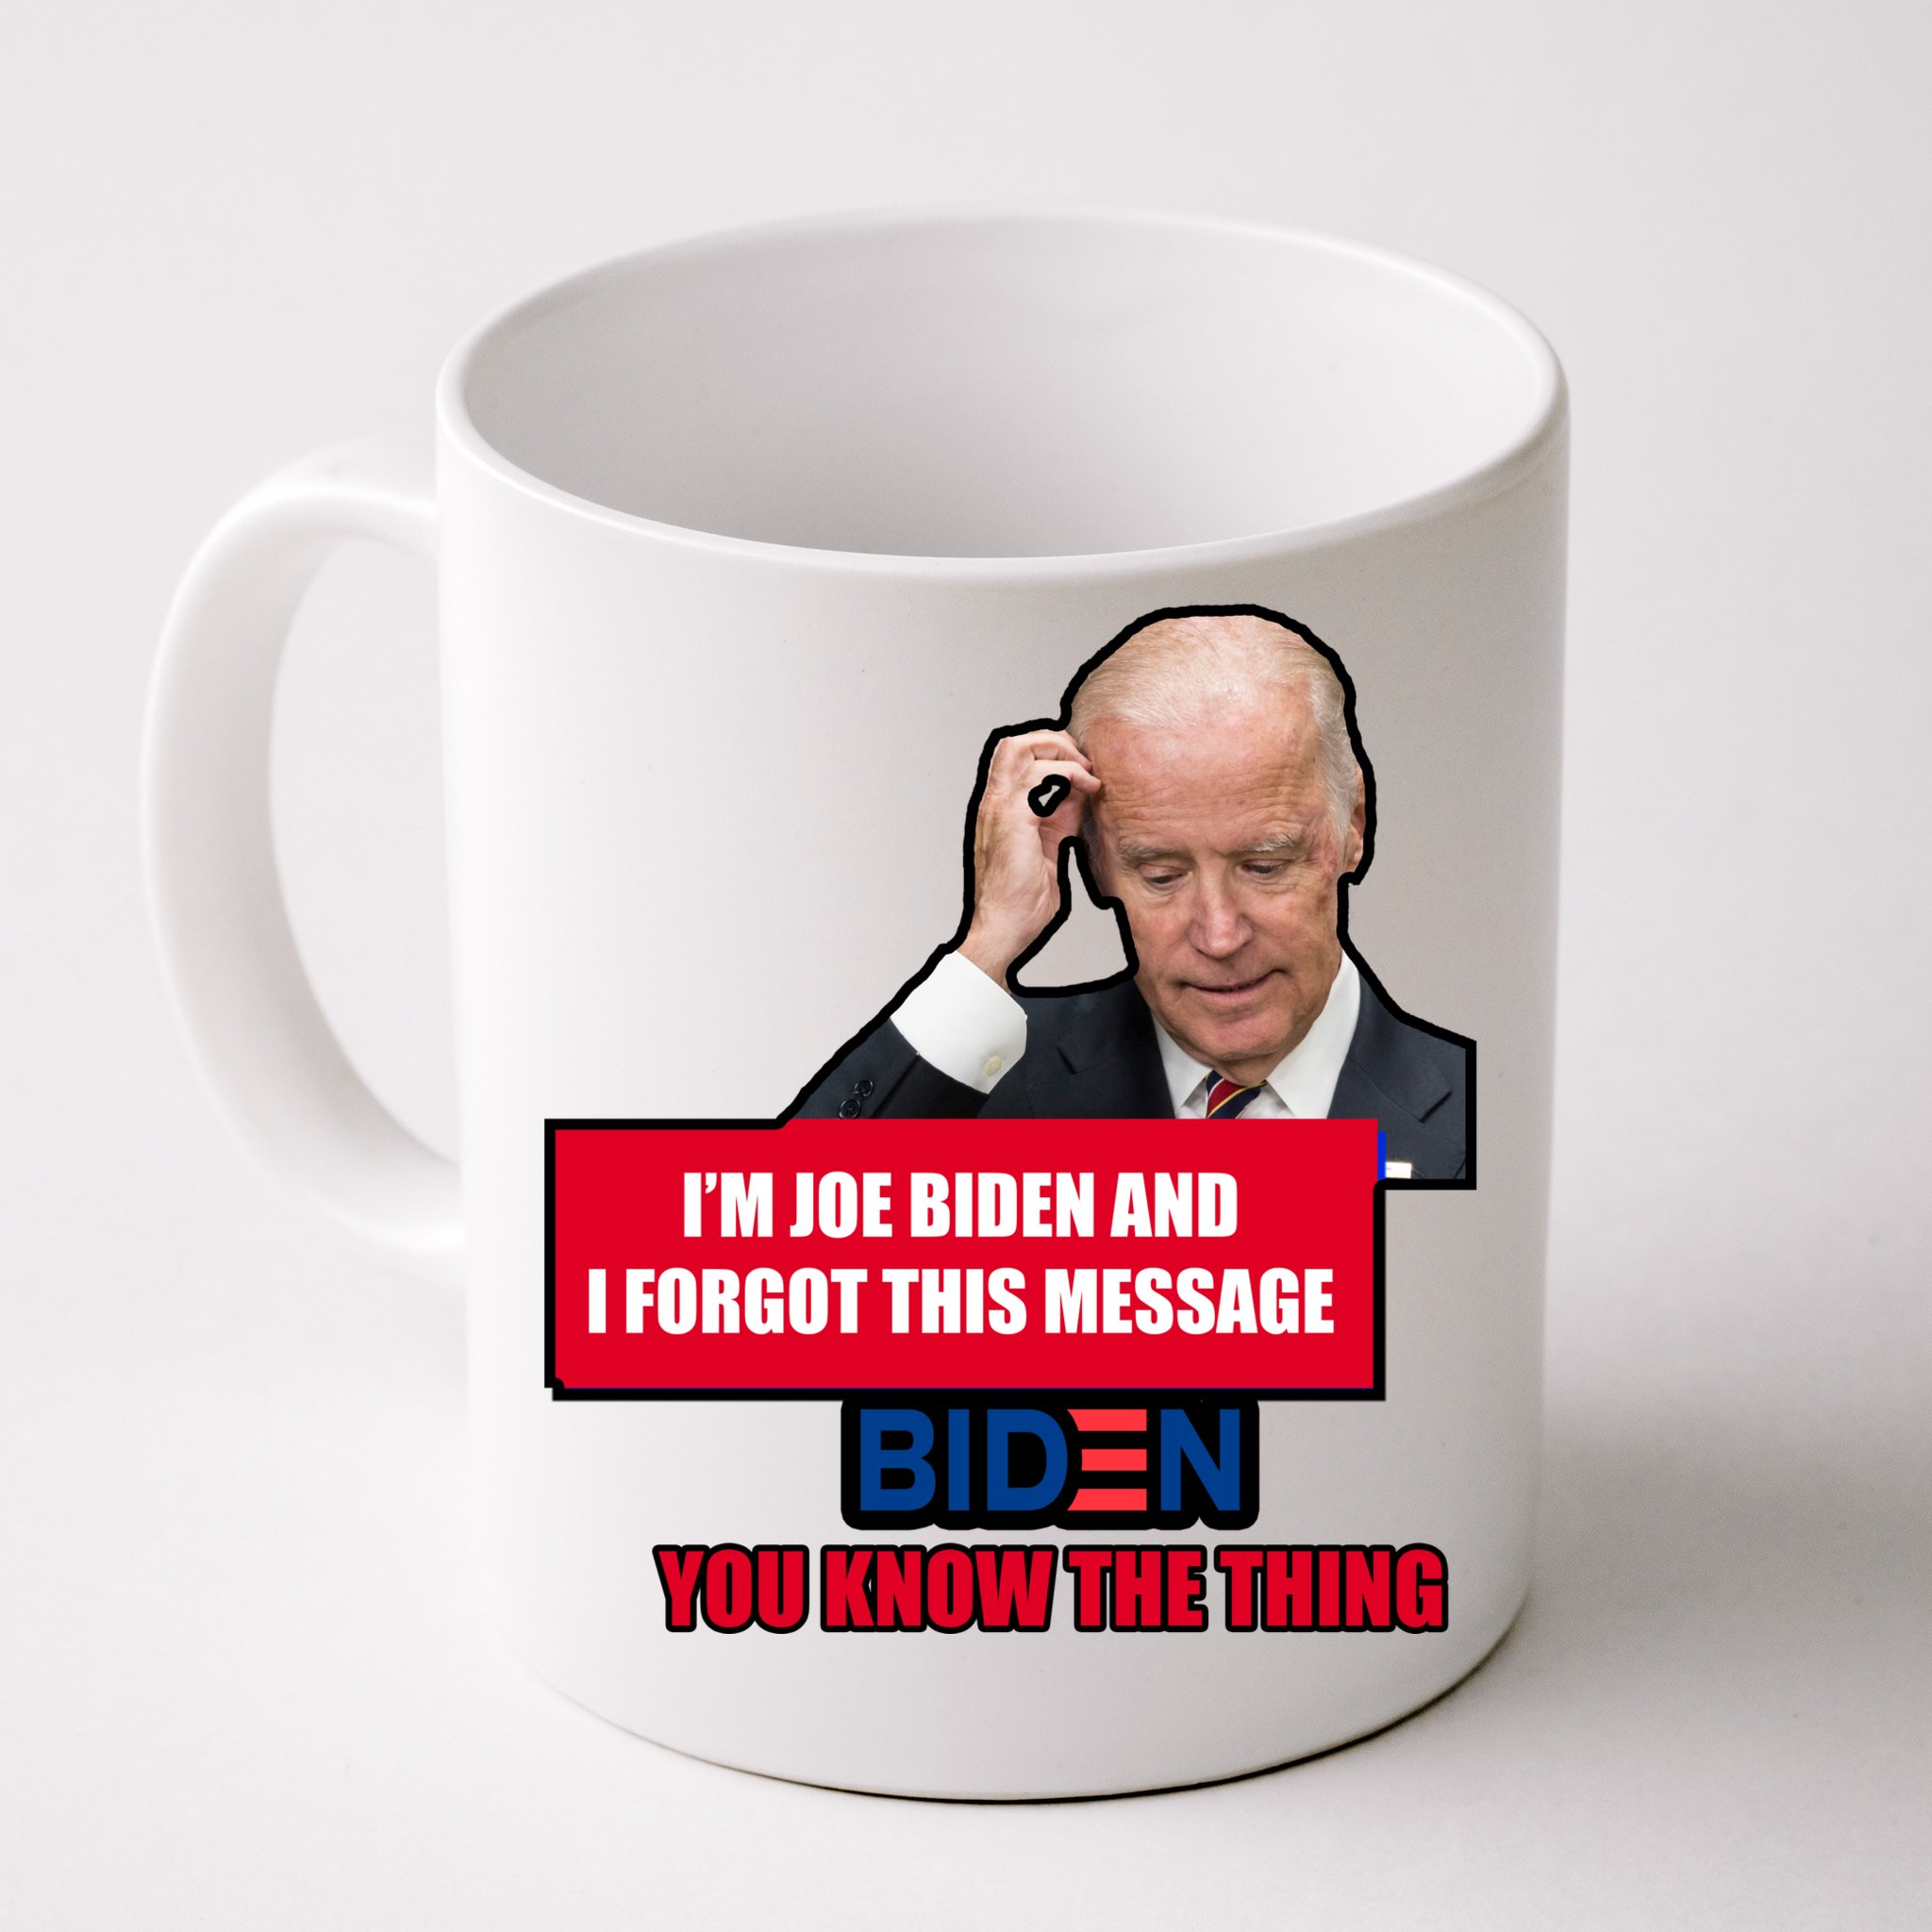 Ridin' With Biden 2020 Election Funny Coffee Mug 